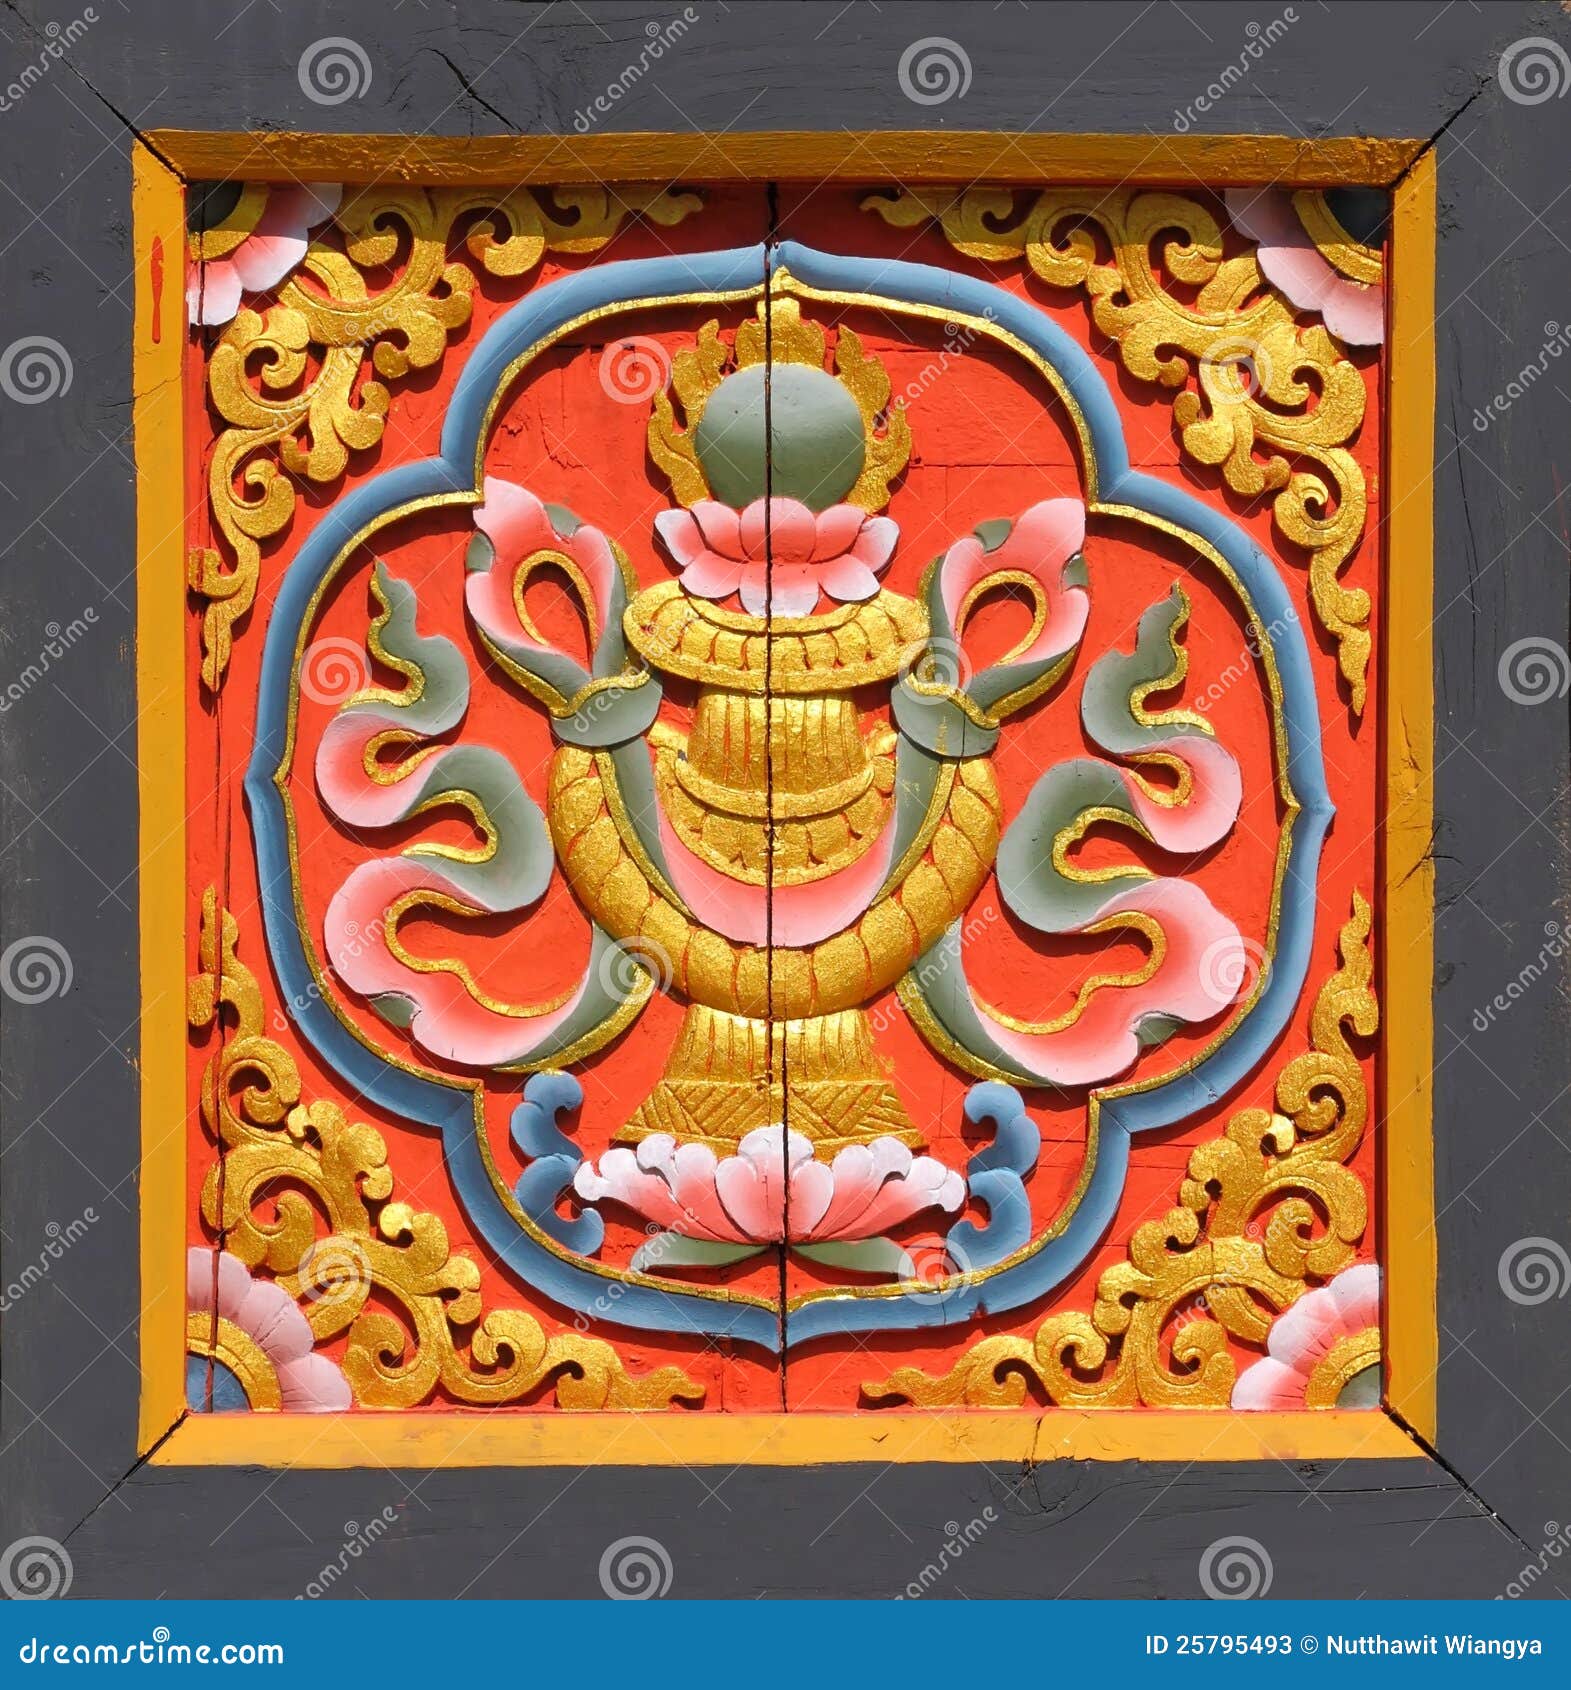 Traditional Bhutanese Style Art Stock Photos - Image: 25795493